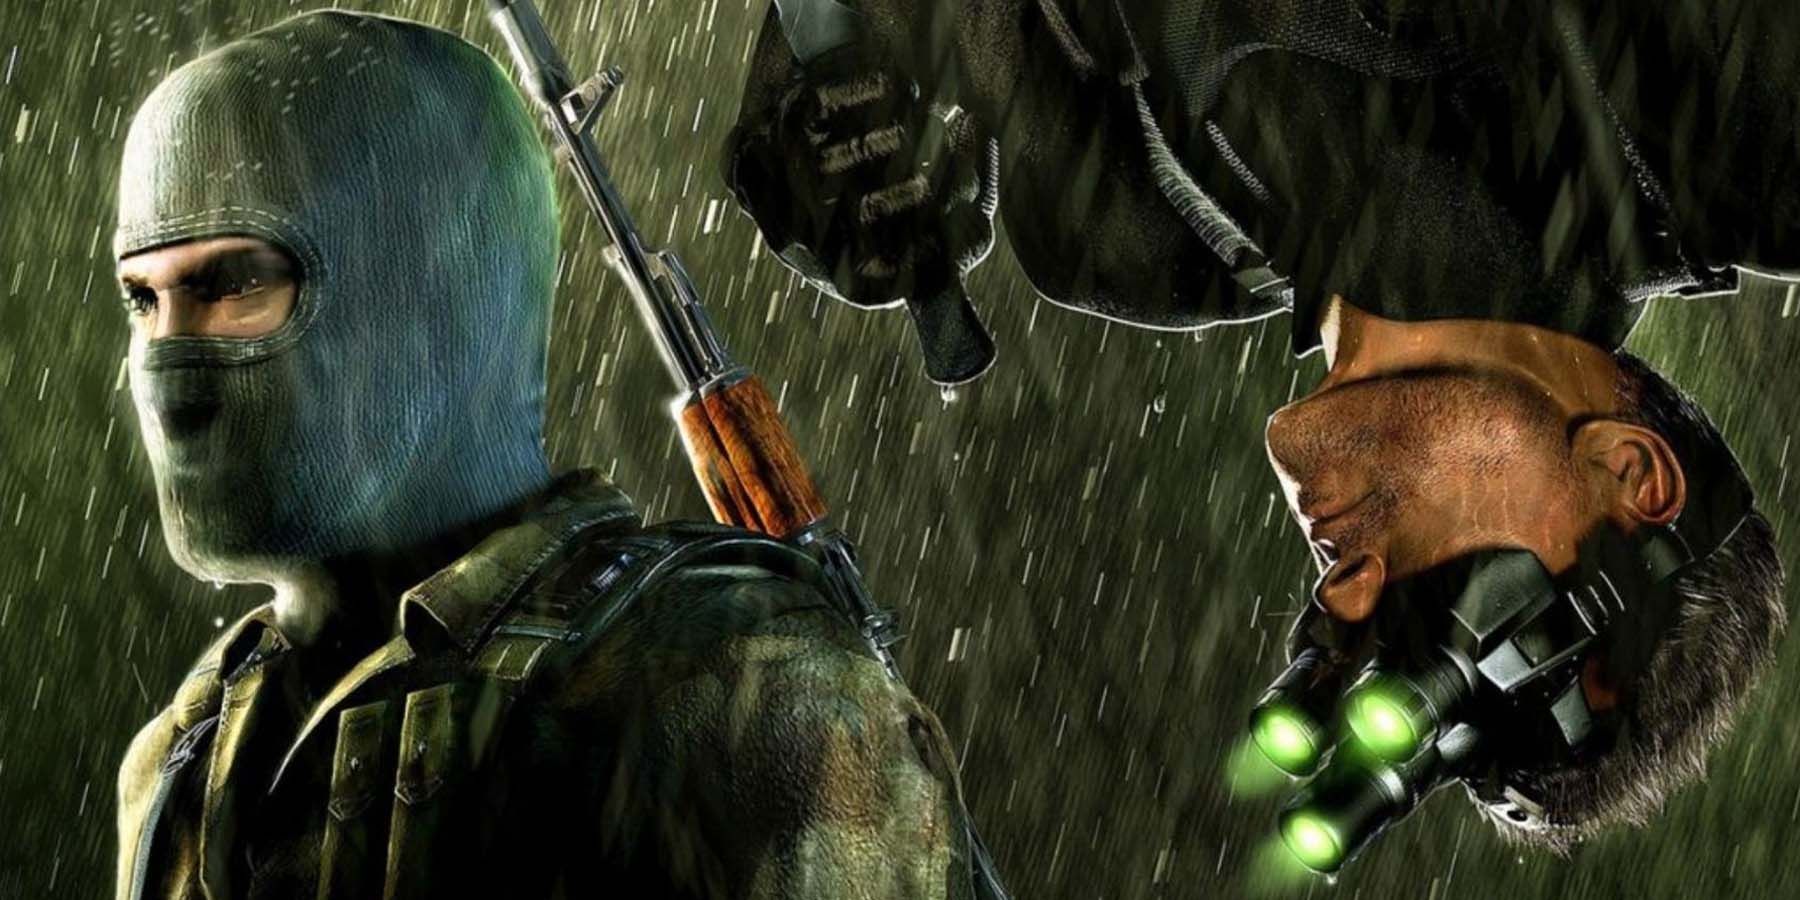 Tom Clancy's Splinter Cell: Blacklist - Metacritic